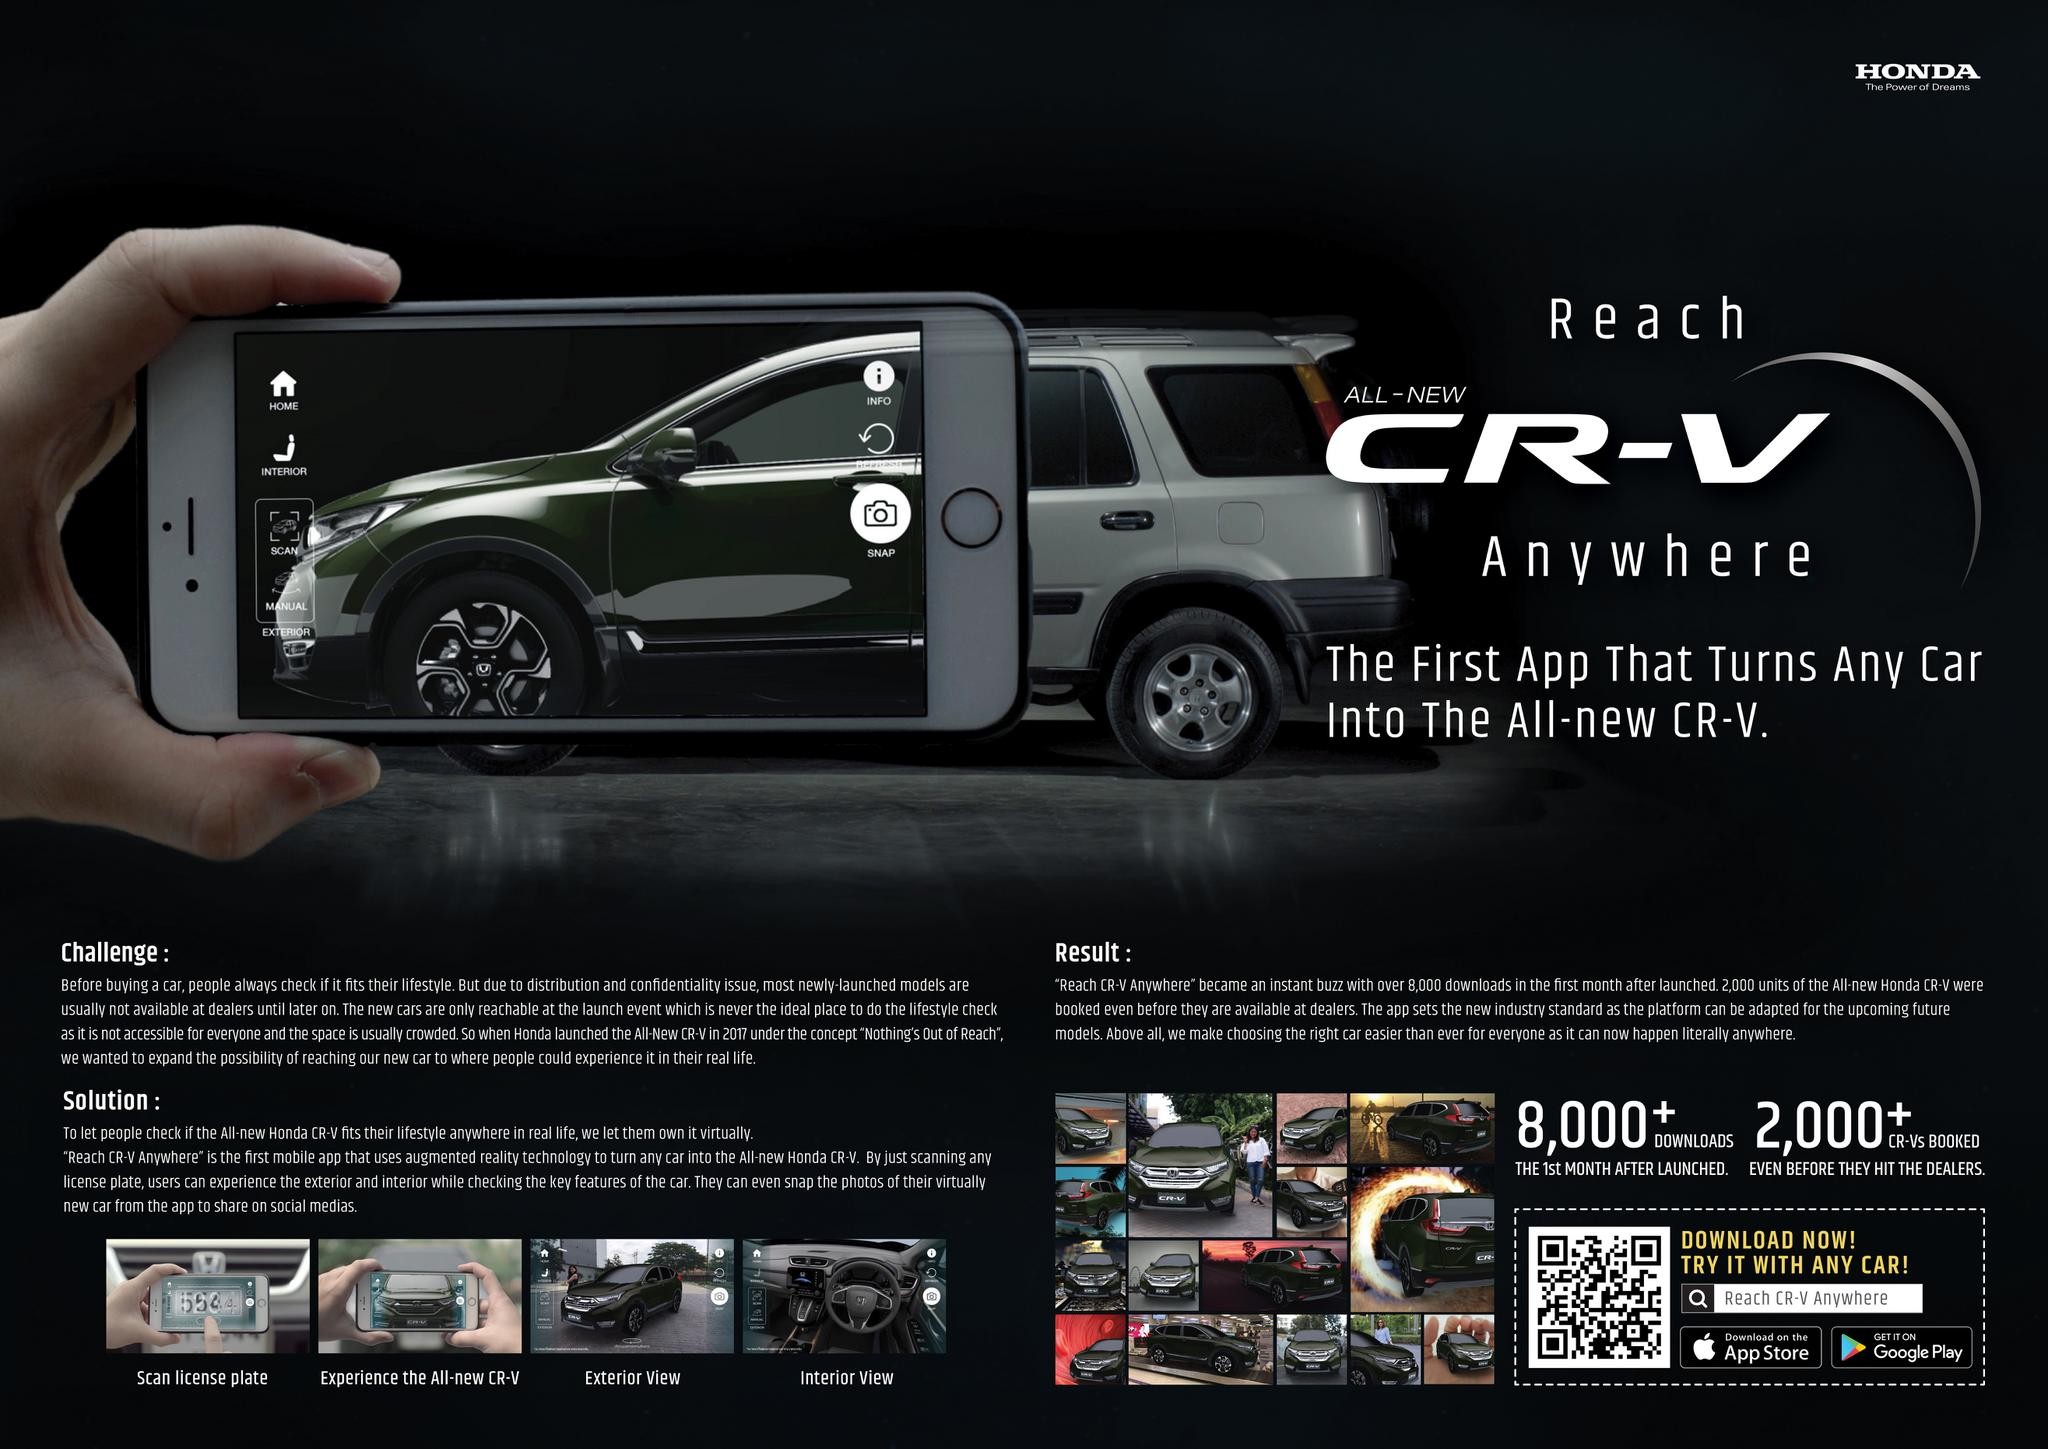 Reach CR-V Anywhere